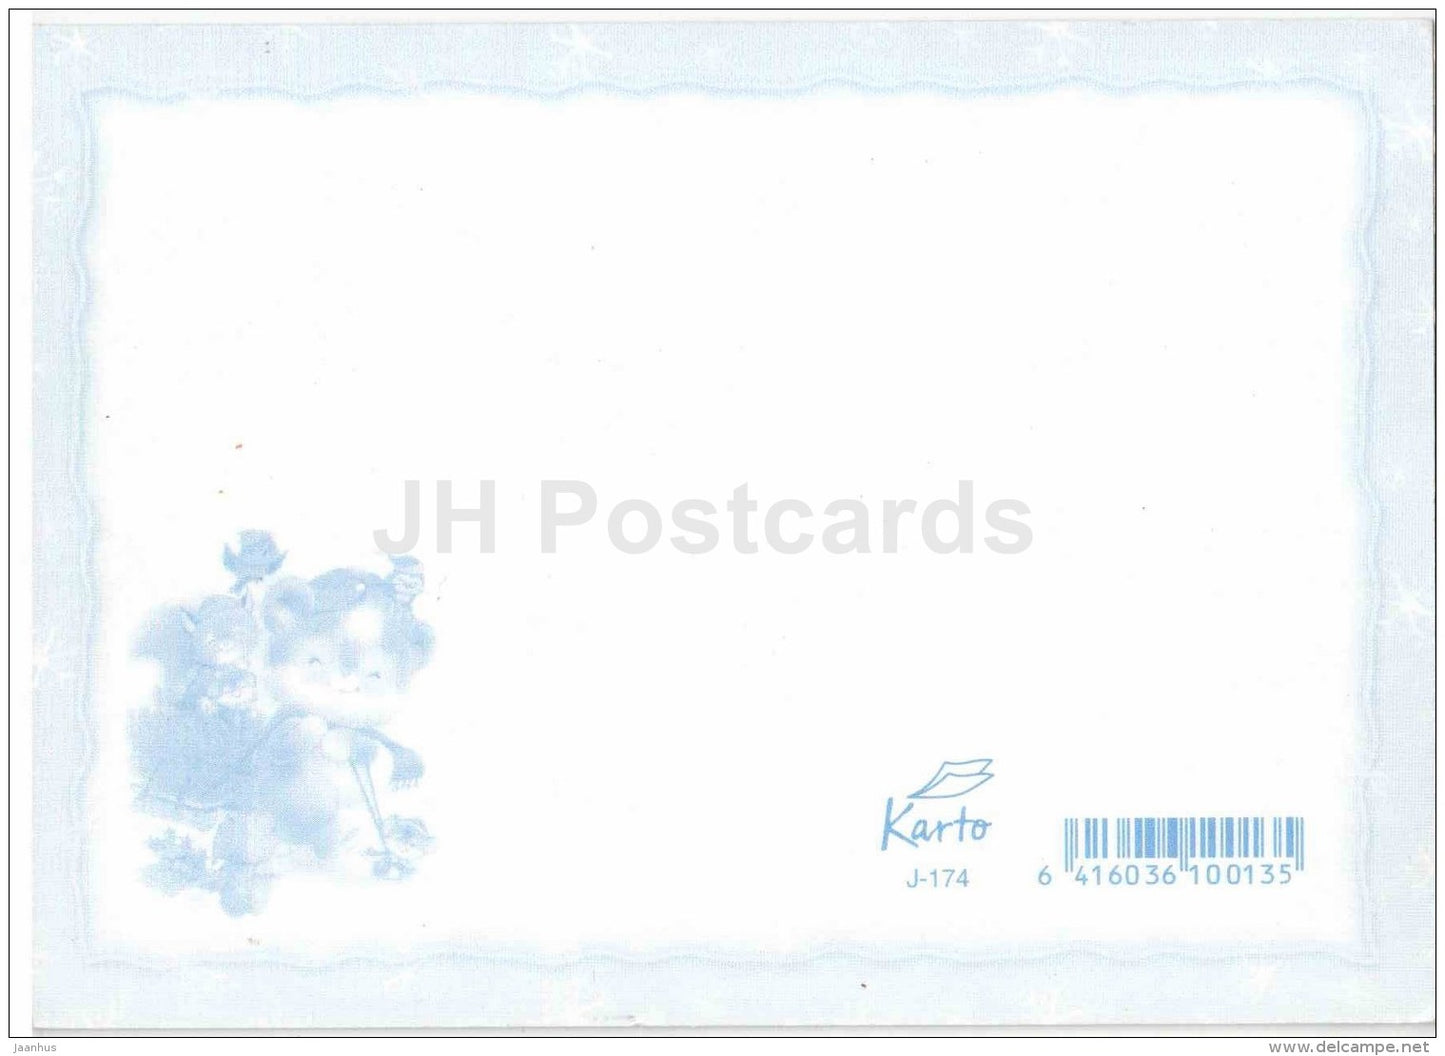 Christmas greeting card - Santa Claus - gifts - Estonia - unused - JH Postcards